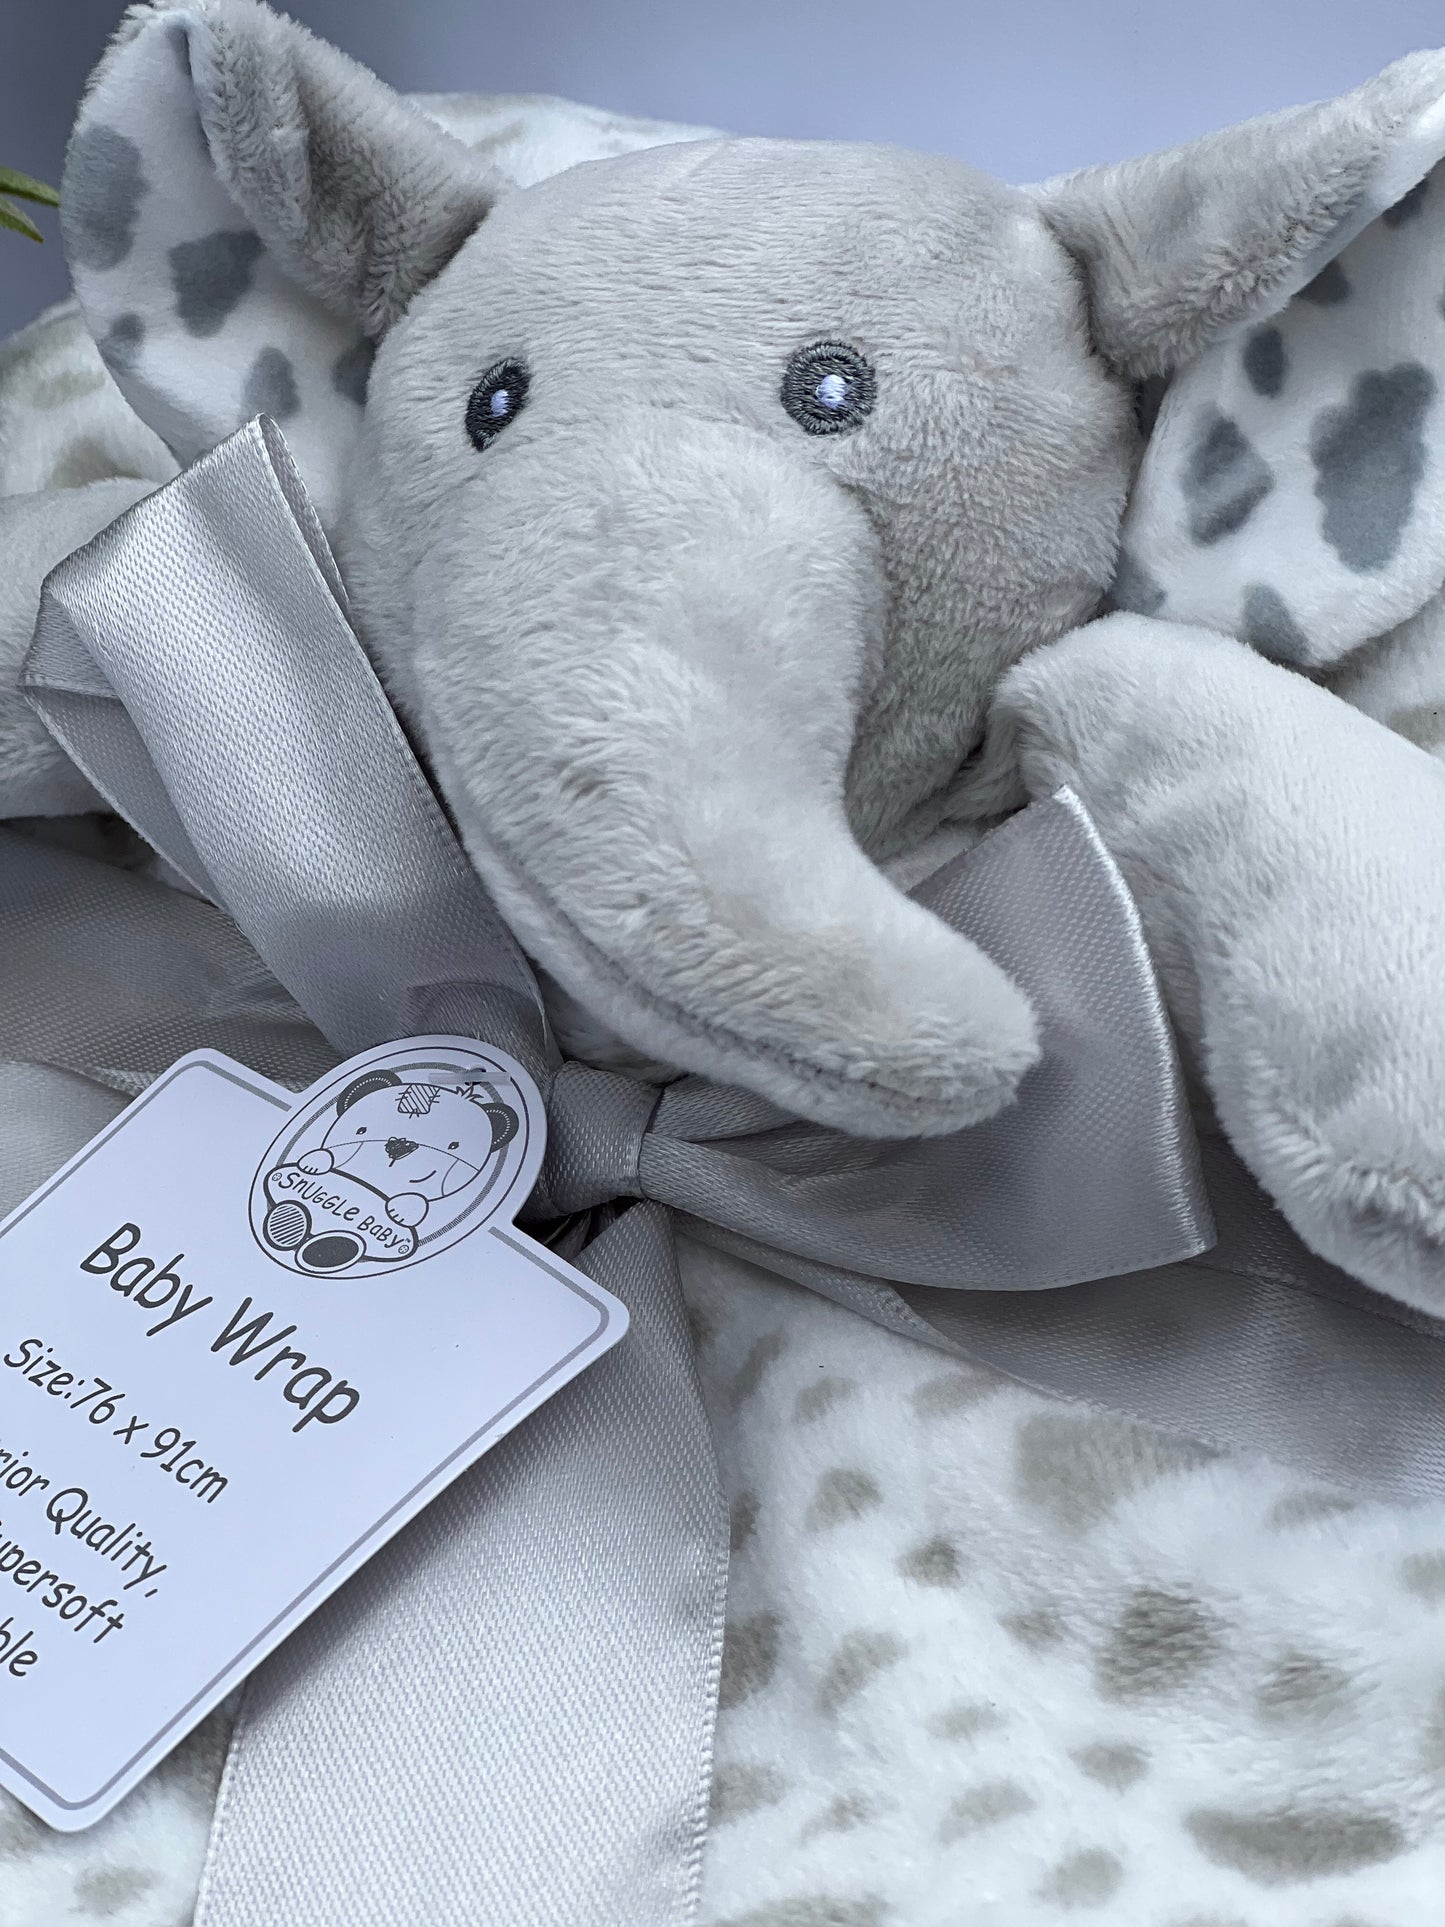 Baby Wrap with Elephant Comforter